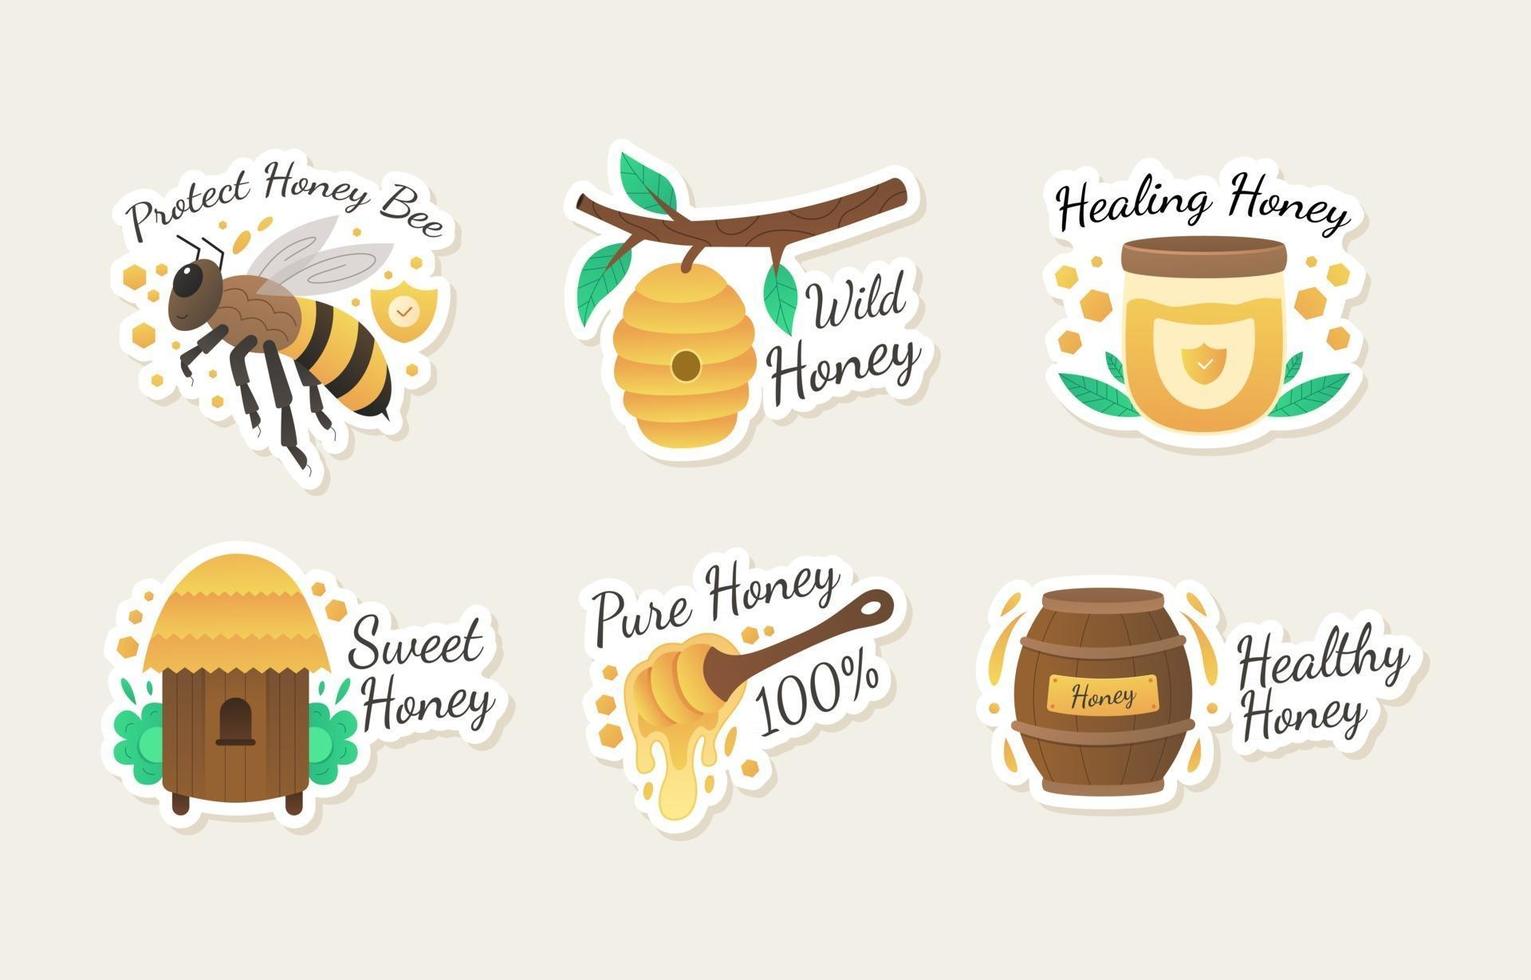 Honey Bee Protection Activism Sticker Set vector